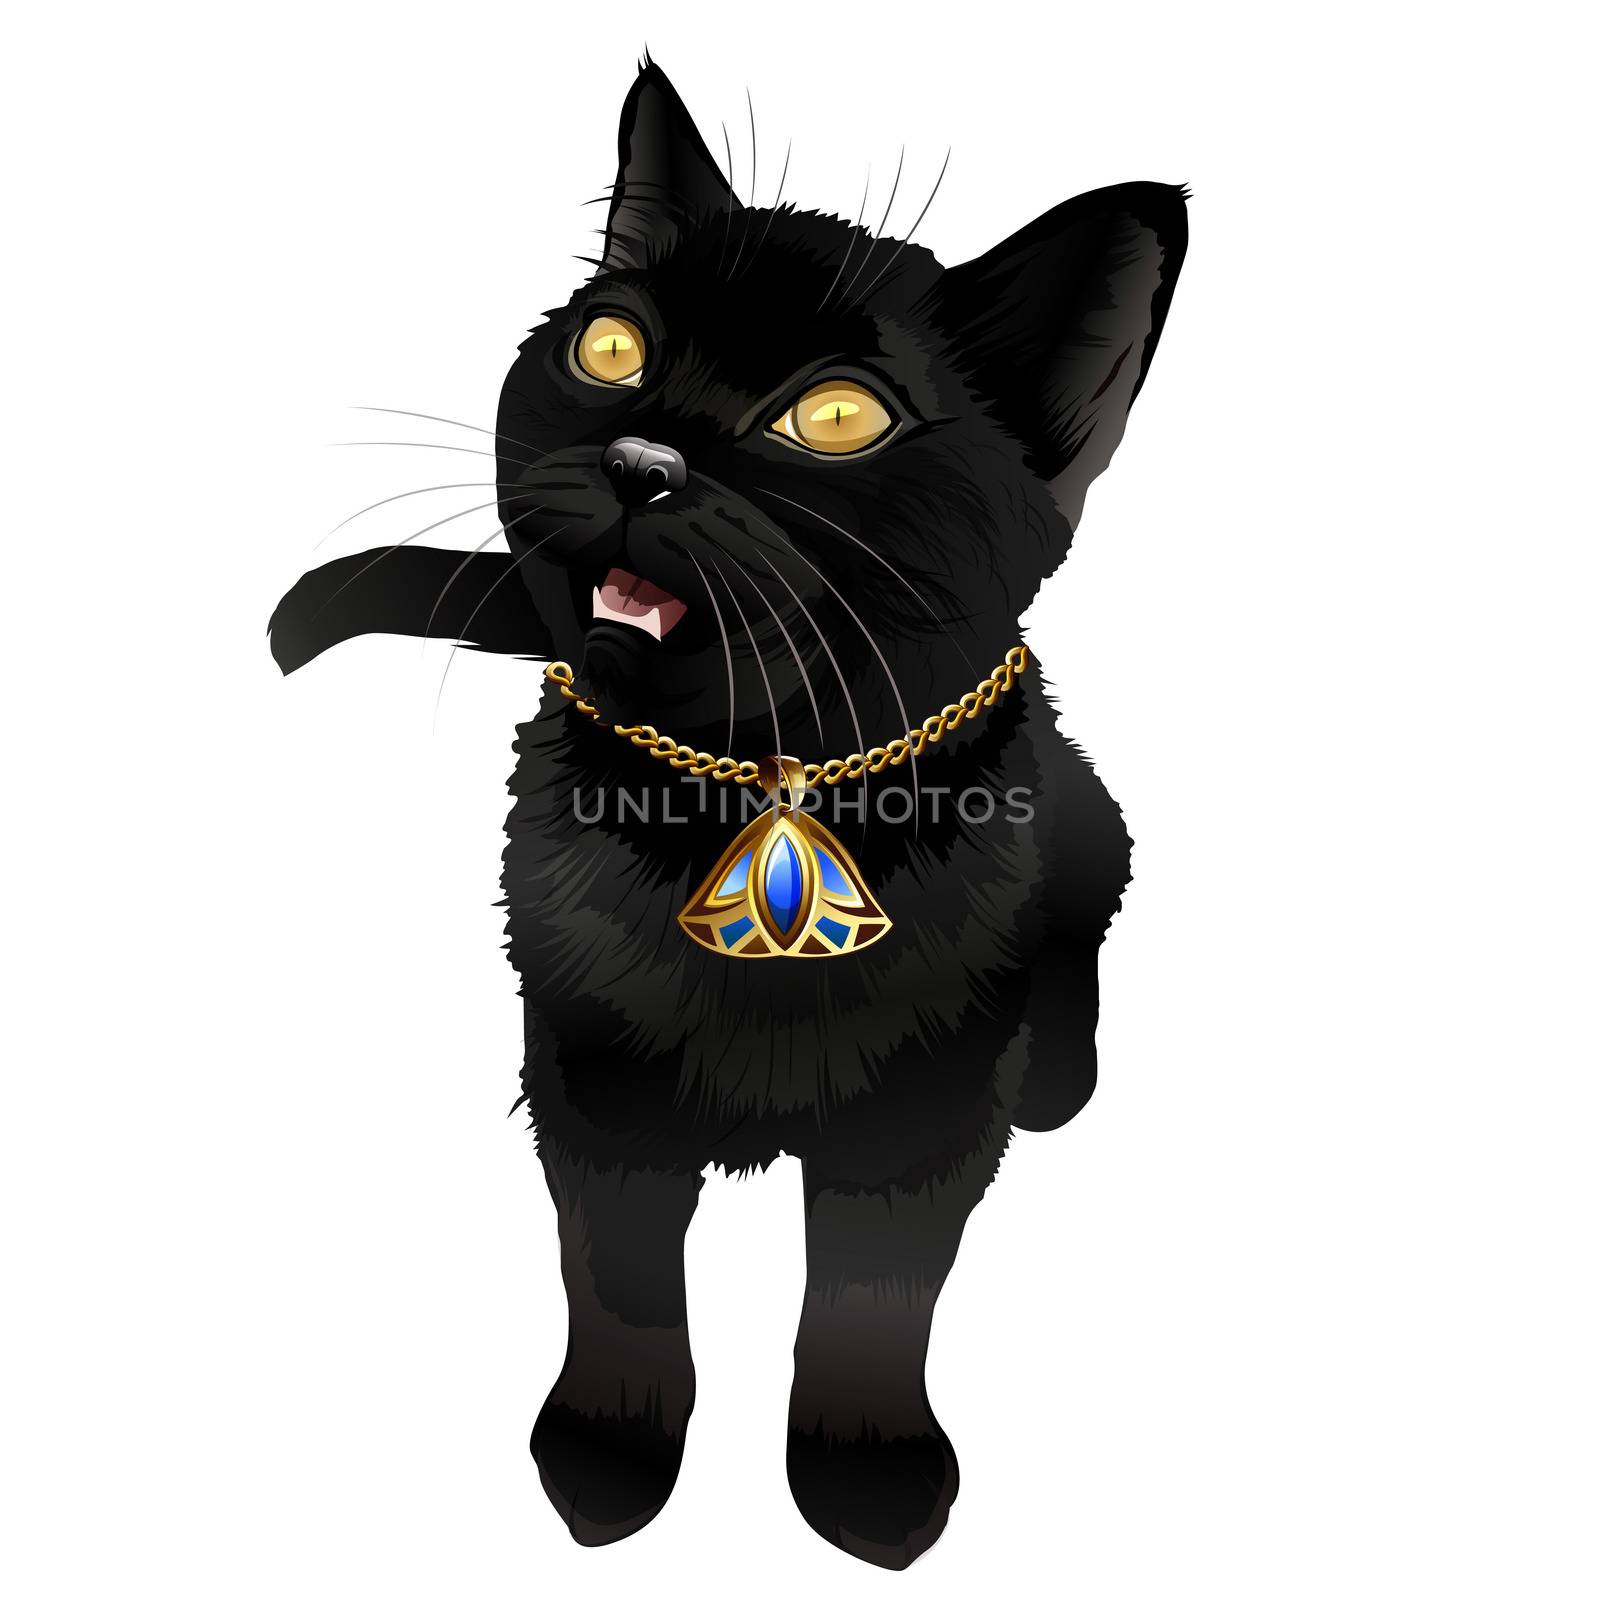 Black Cat Illustration by ConceptCafe